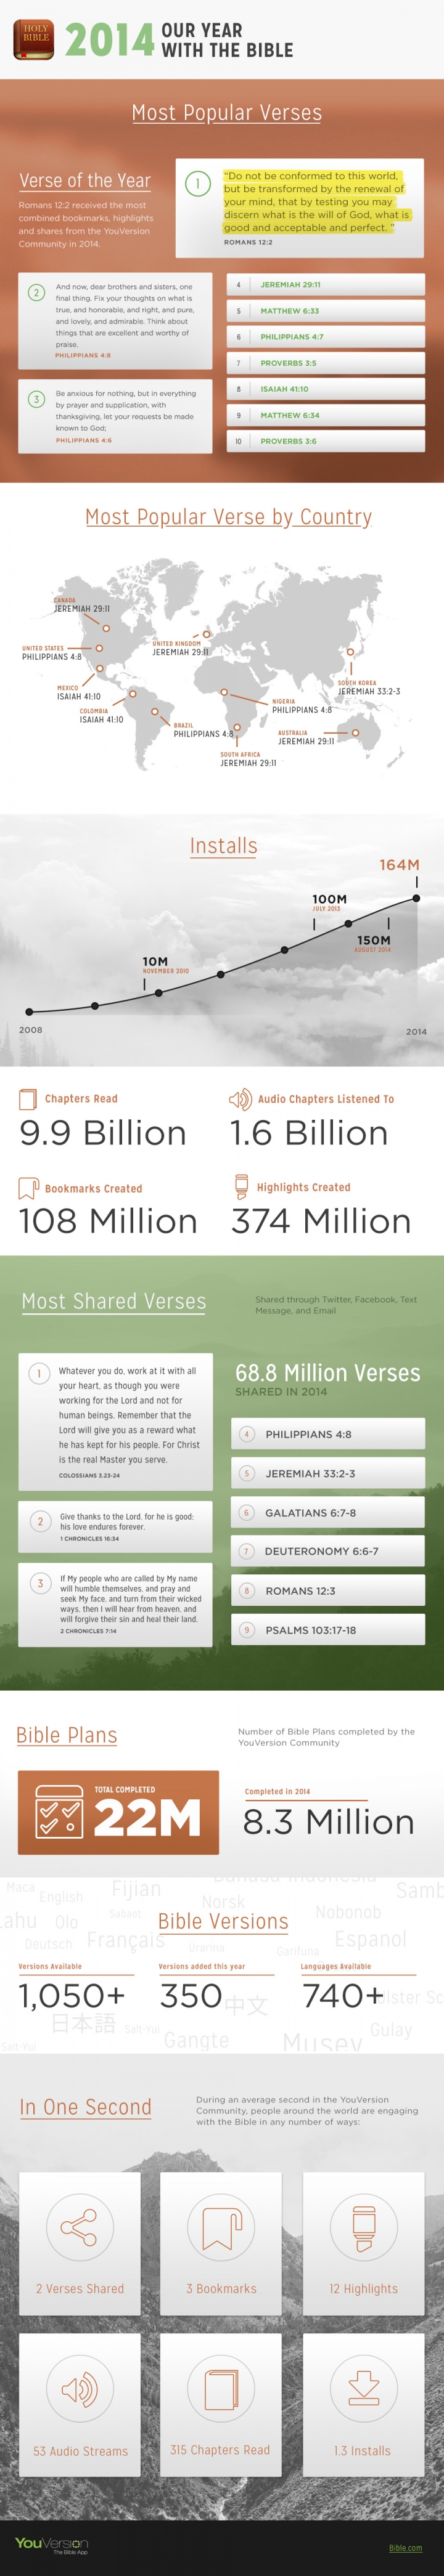 YouVersion聖經 App發布了本年度的用戶統計數據，顯示全球首十個最受歡迎的聖經金句，以及用戶閱讀聖經的情況。(圖:YouVersion)